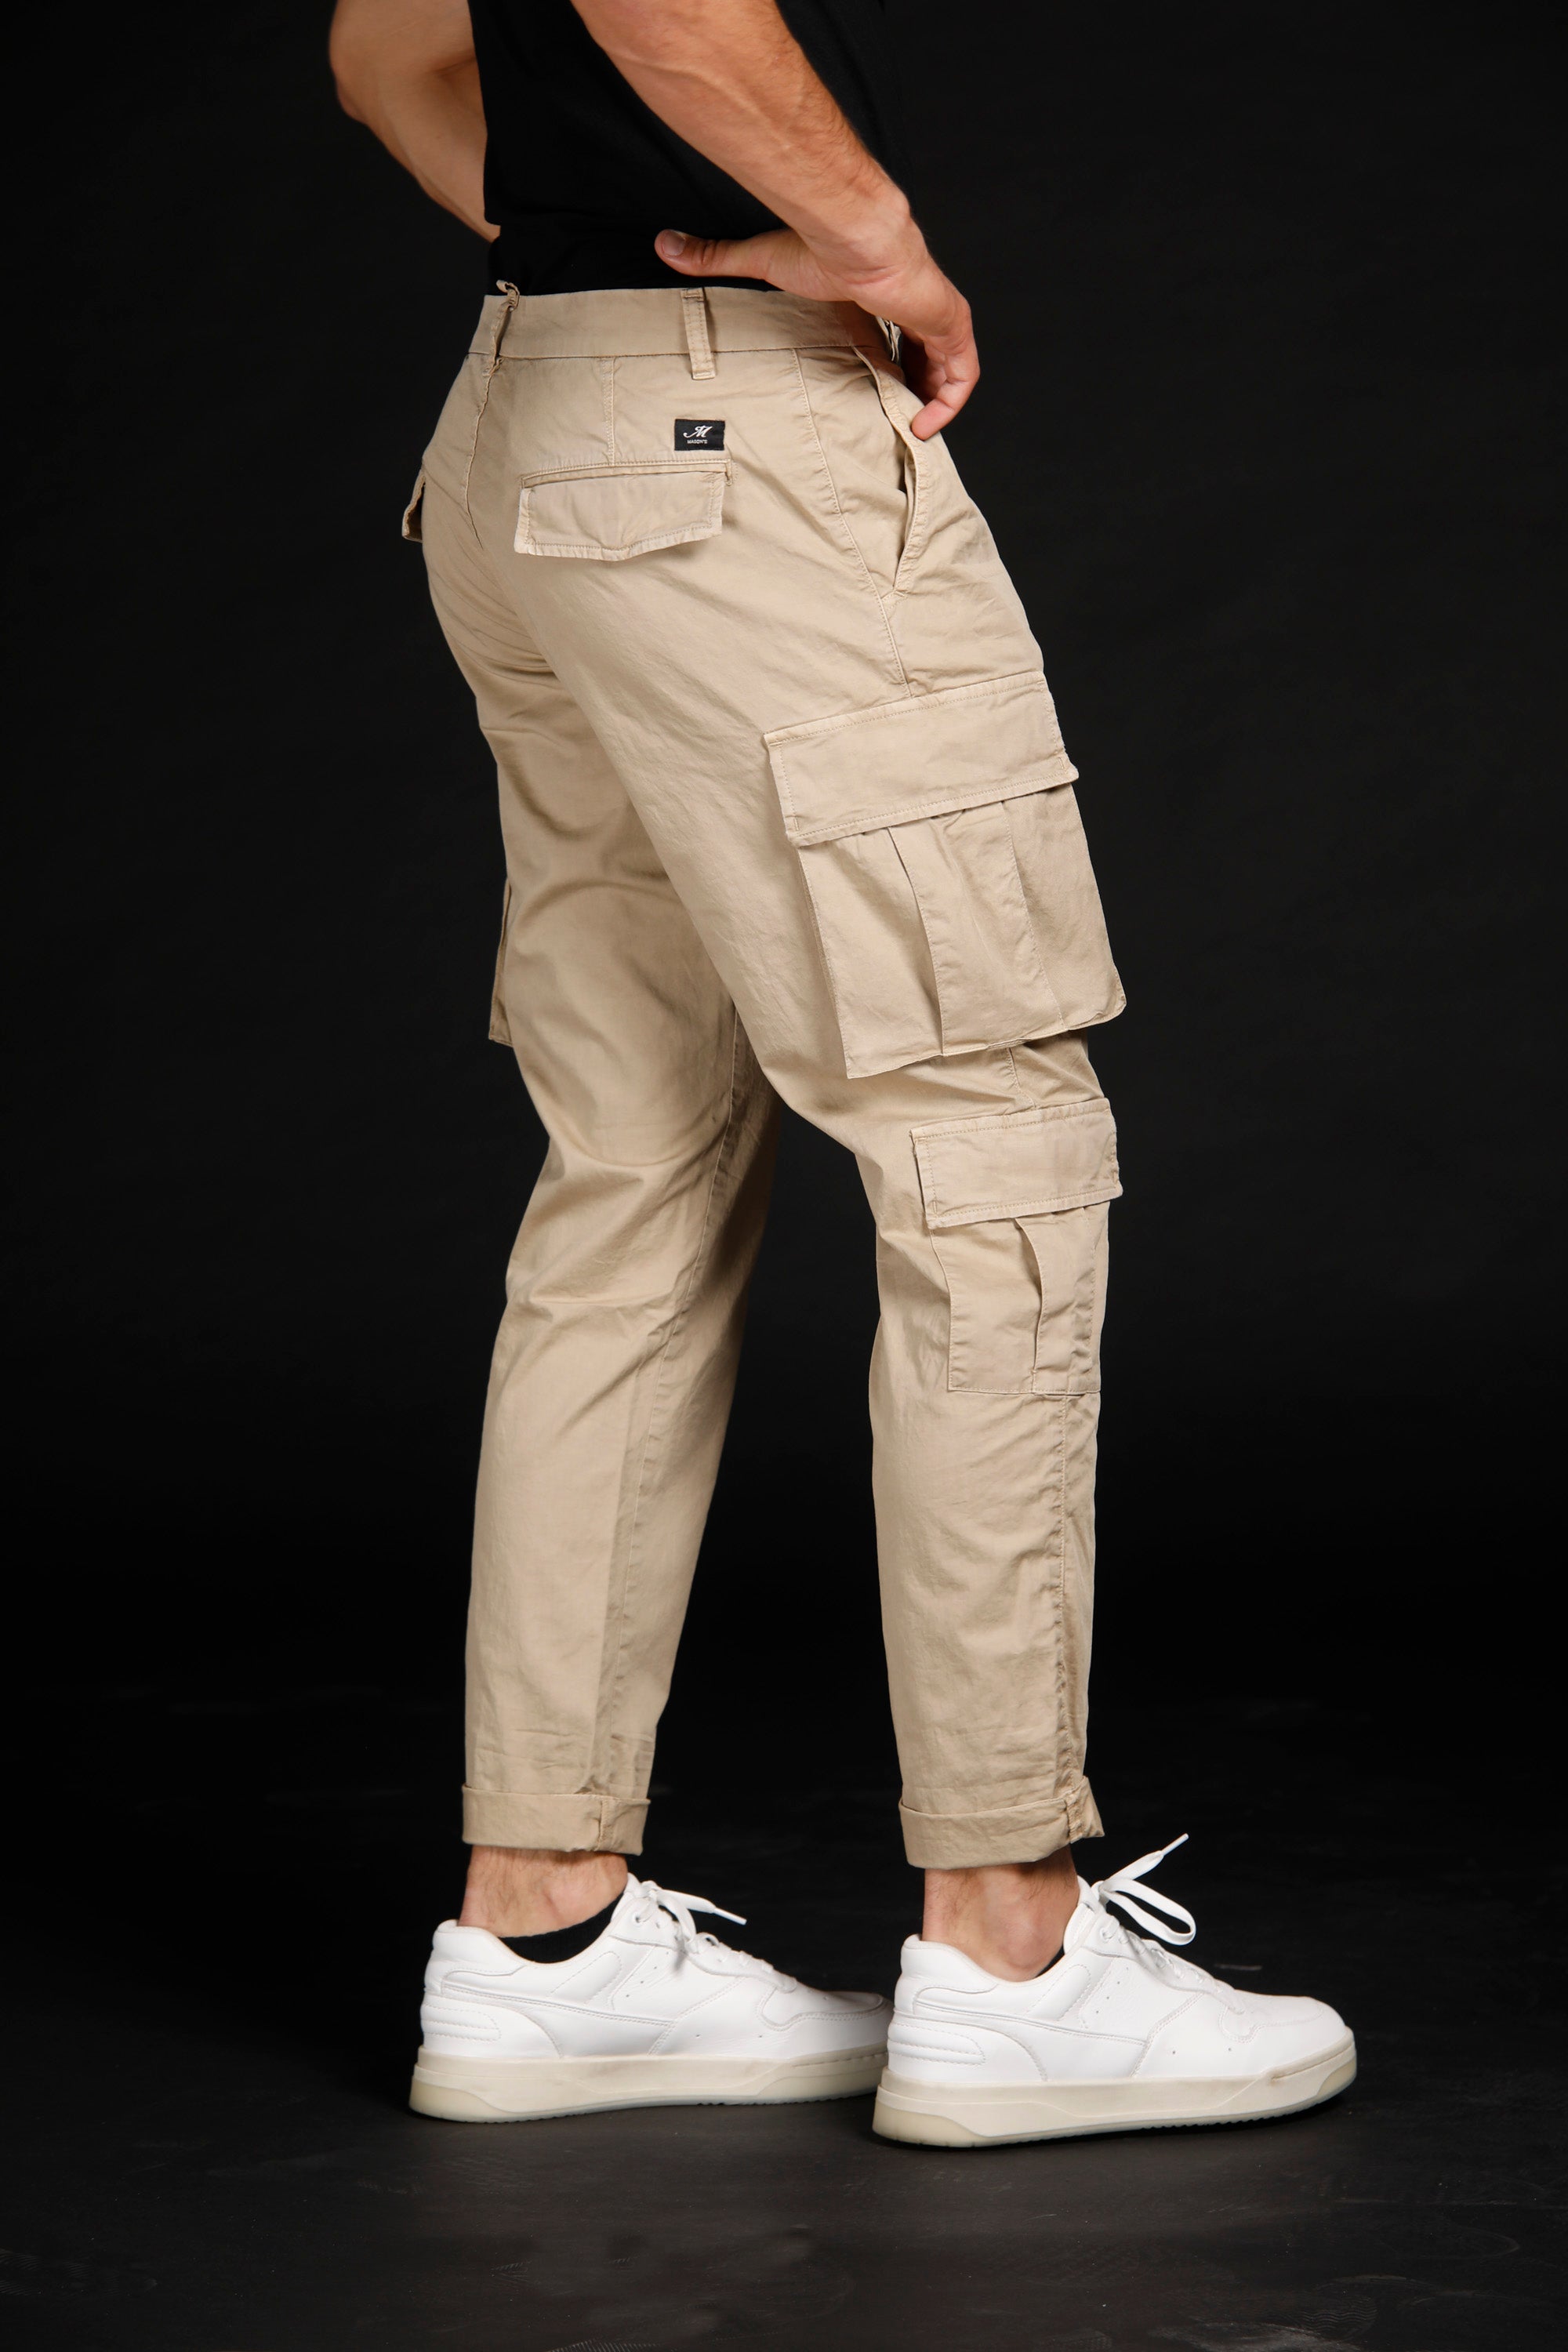 Bahamas pantalon cargo homme édition limitée en coton stretch regular ①